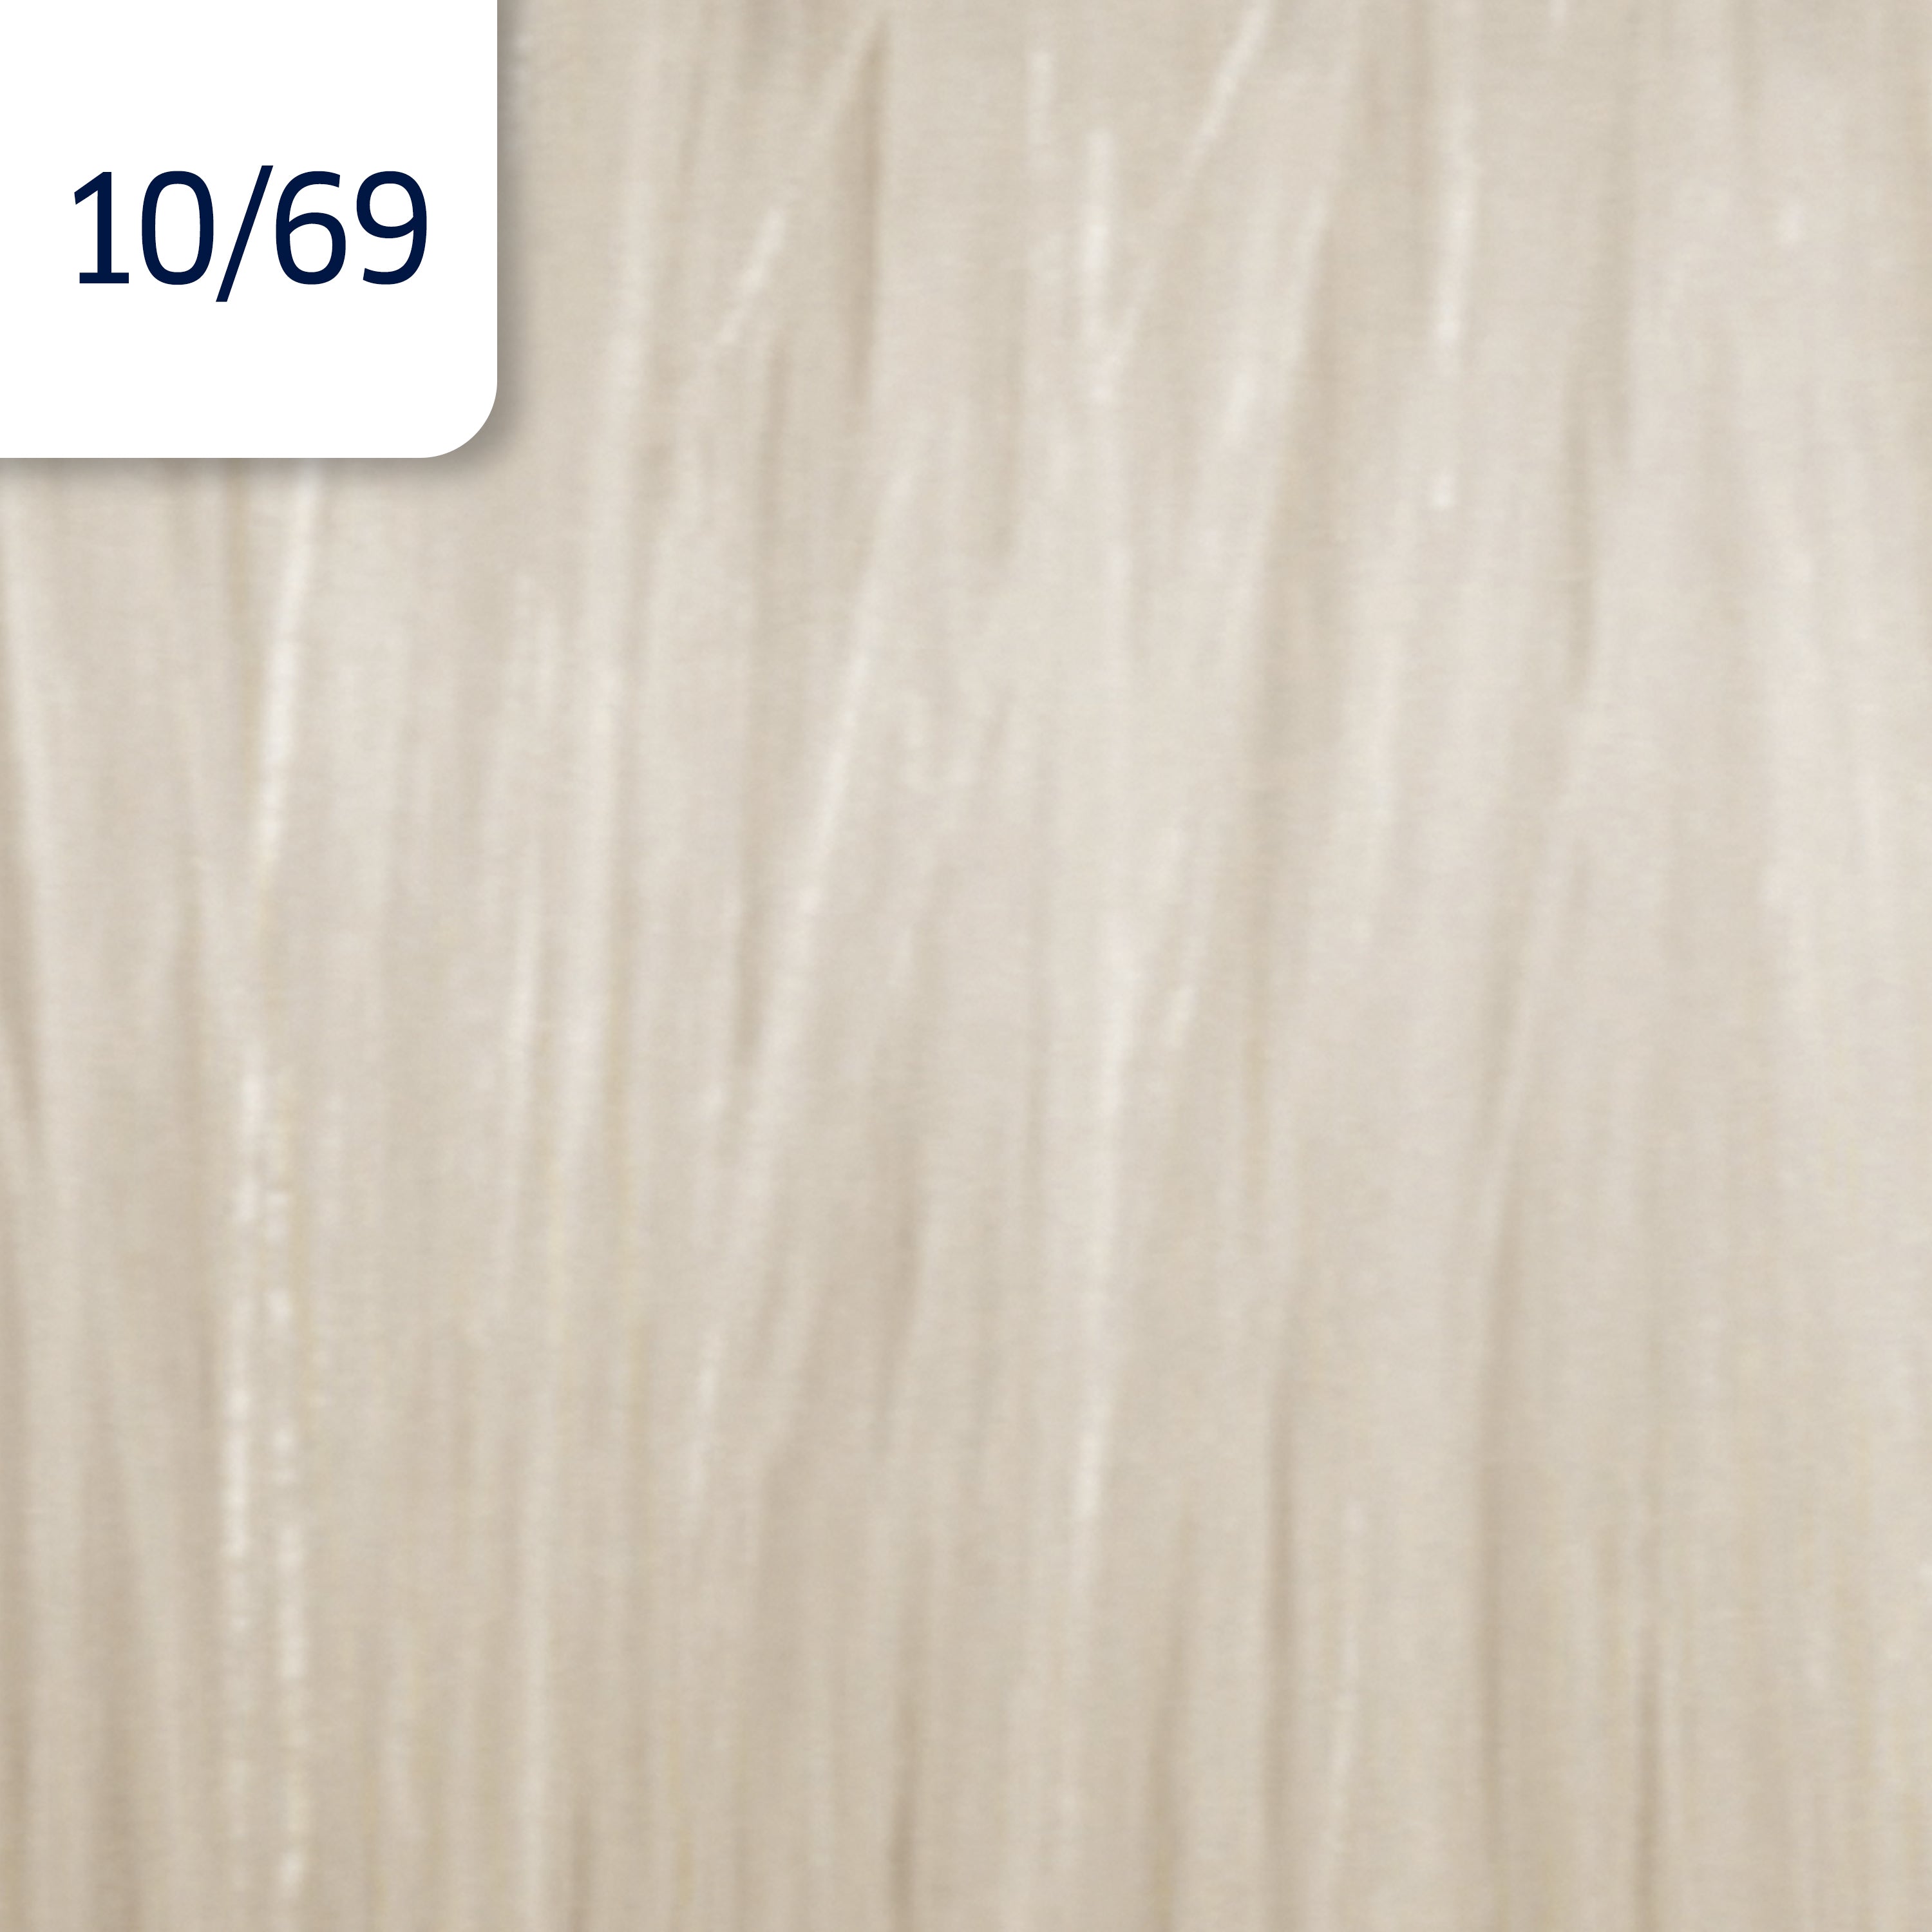 Wella Professional Illumina 10/69 Lightest Violet Cendre Blonde 60 ml